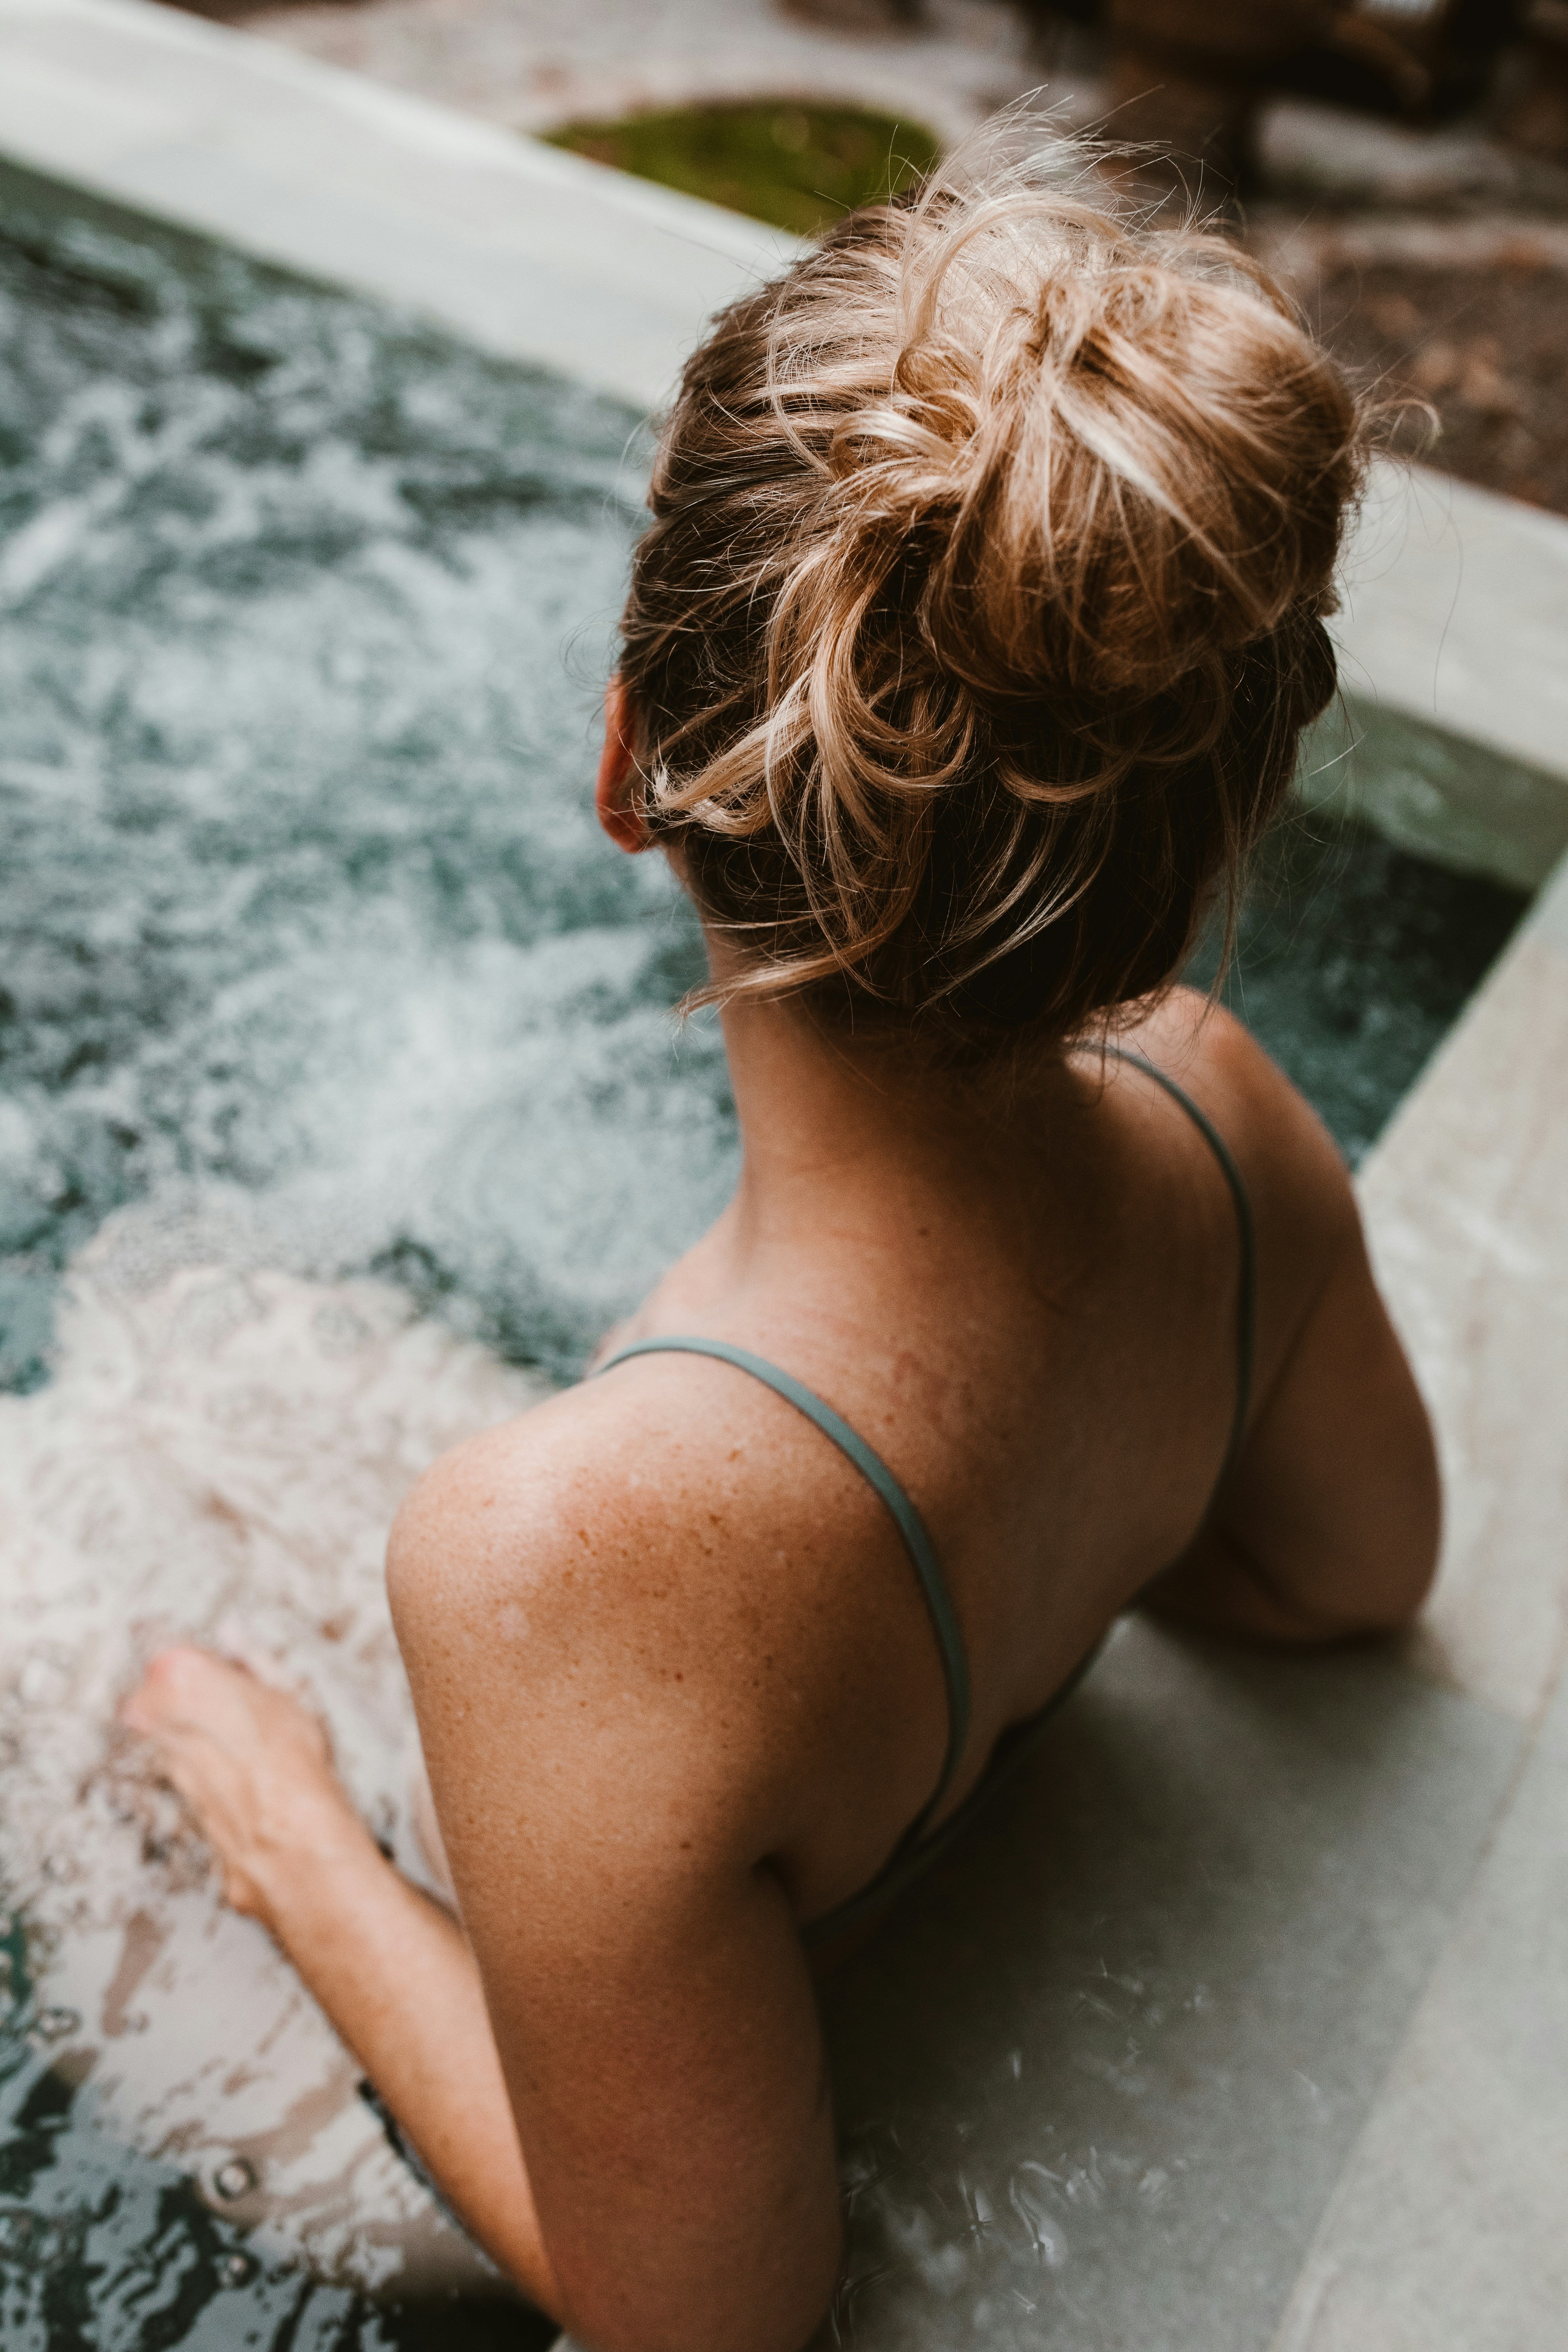 A woman sitting in a hot tub